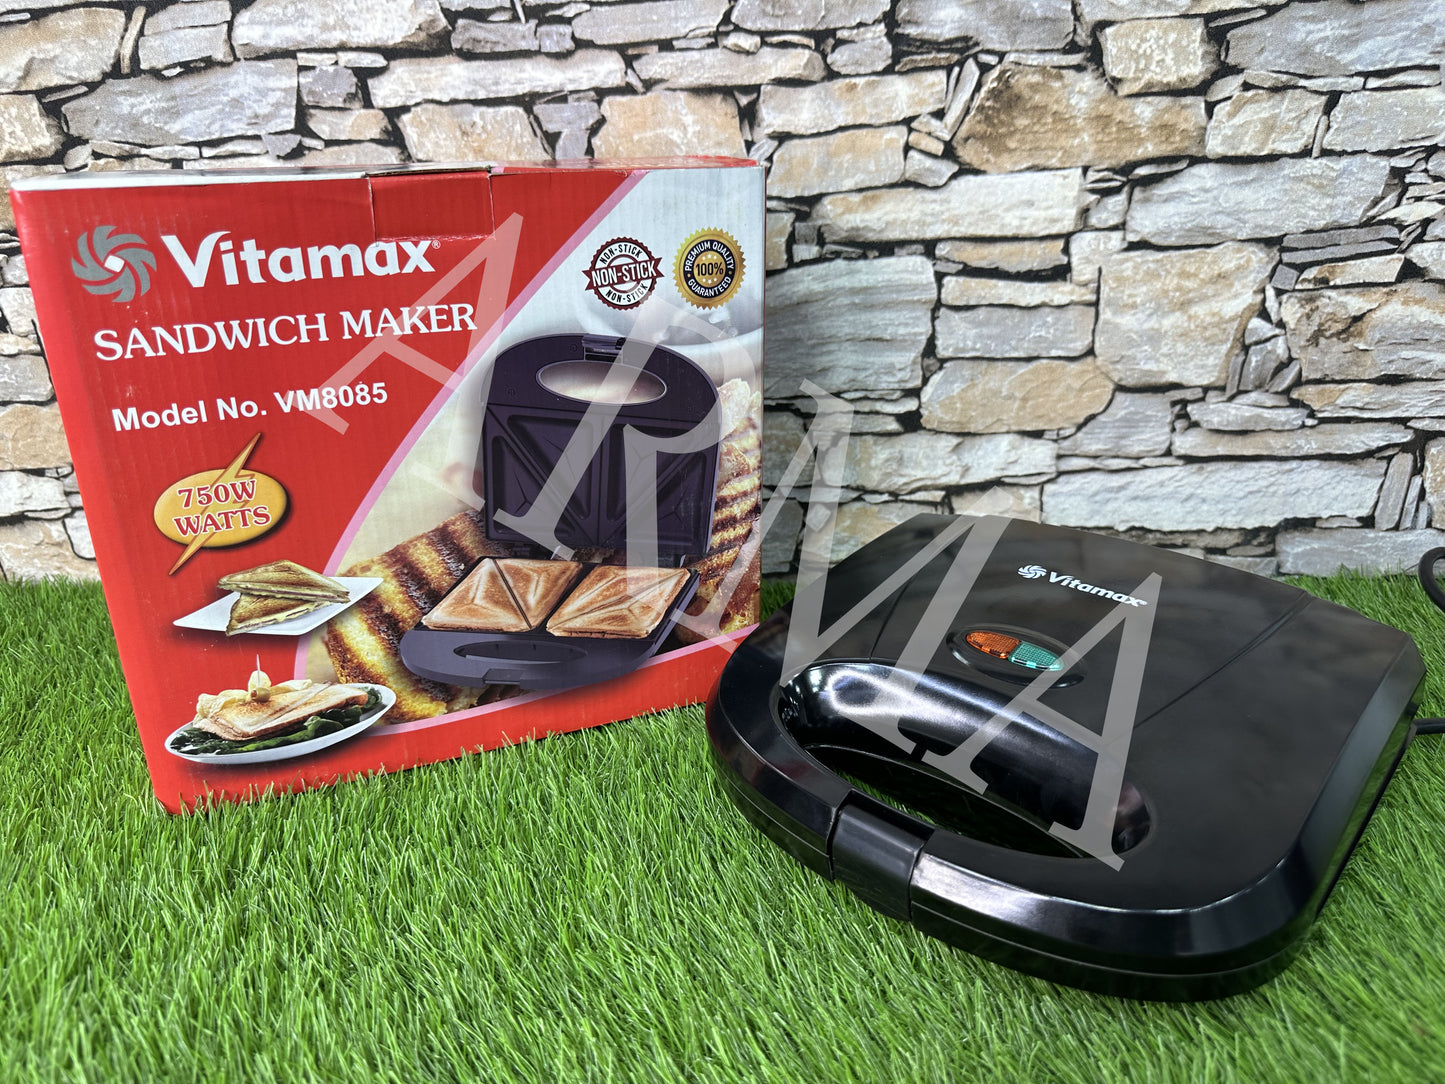 Vitamax Sandwich Maker